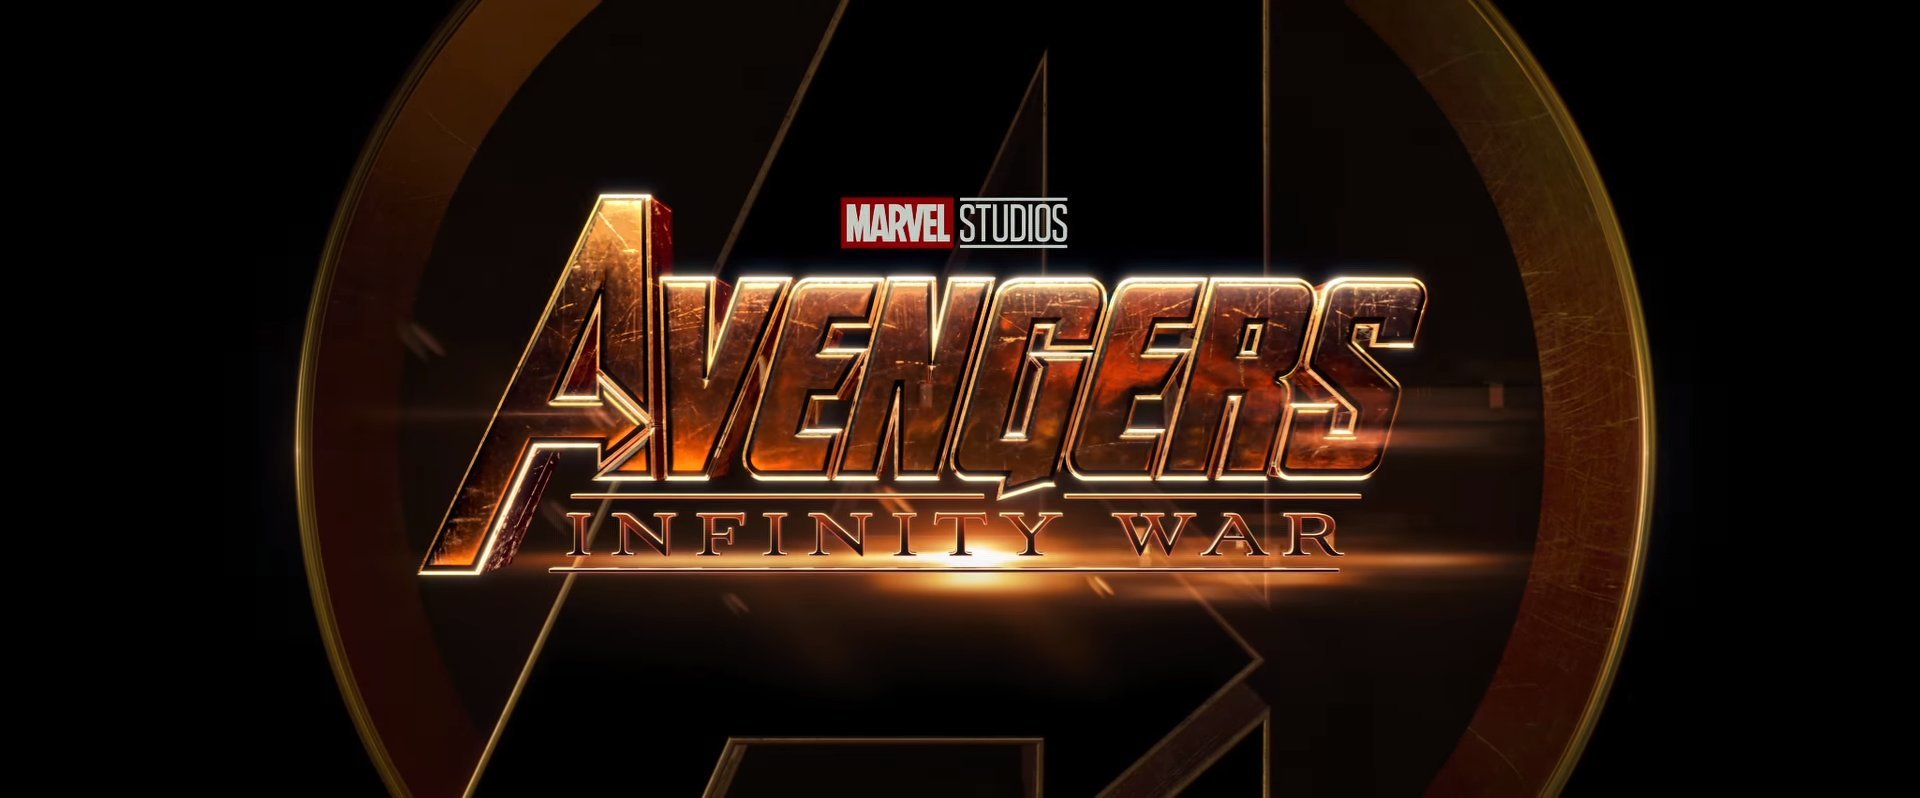 Marvel Studios Avengers Infinity War - HD Wallpaper 